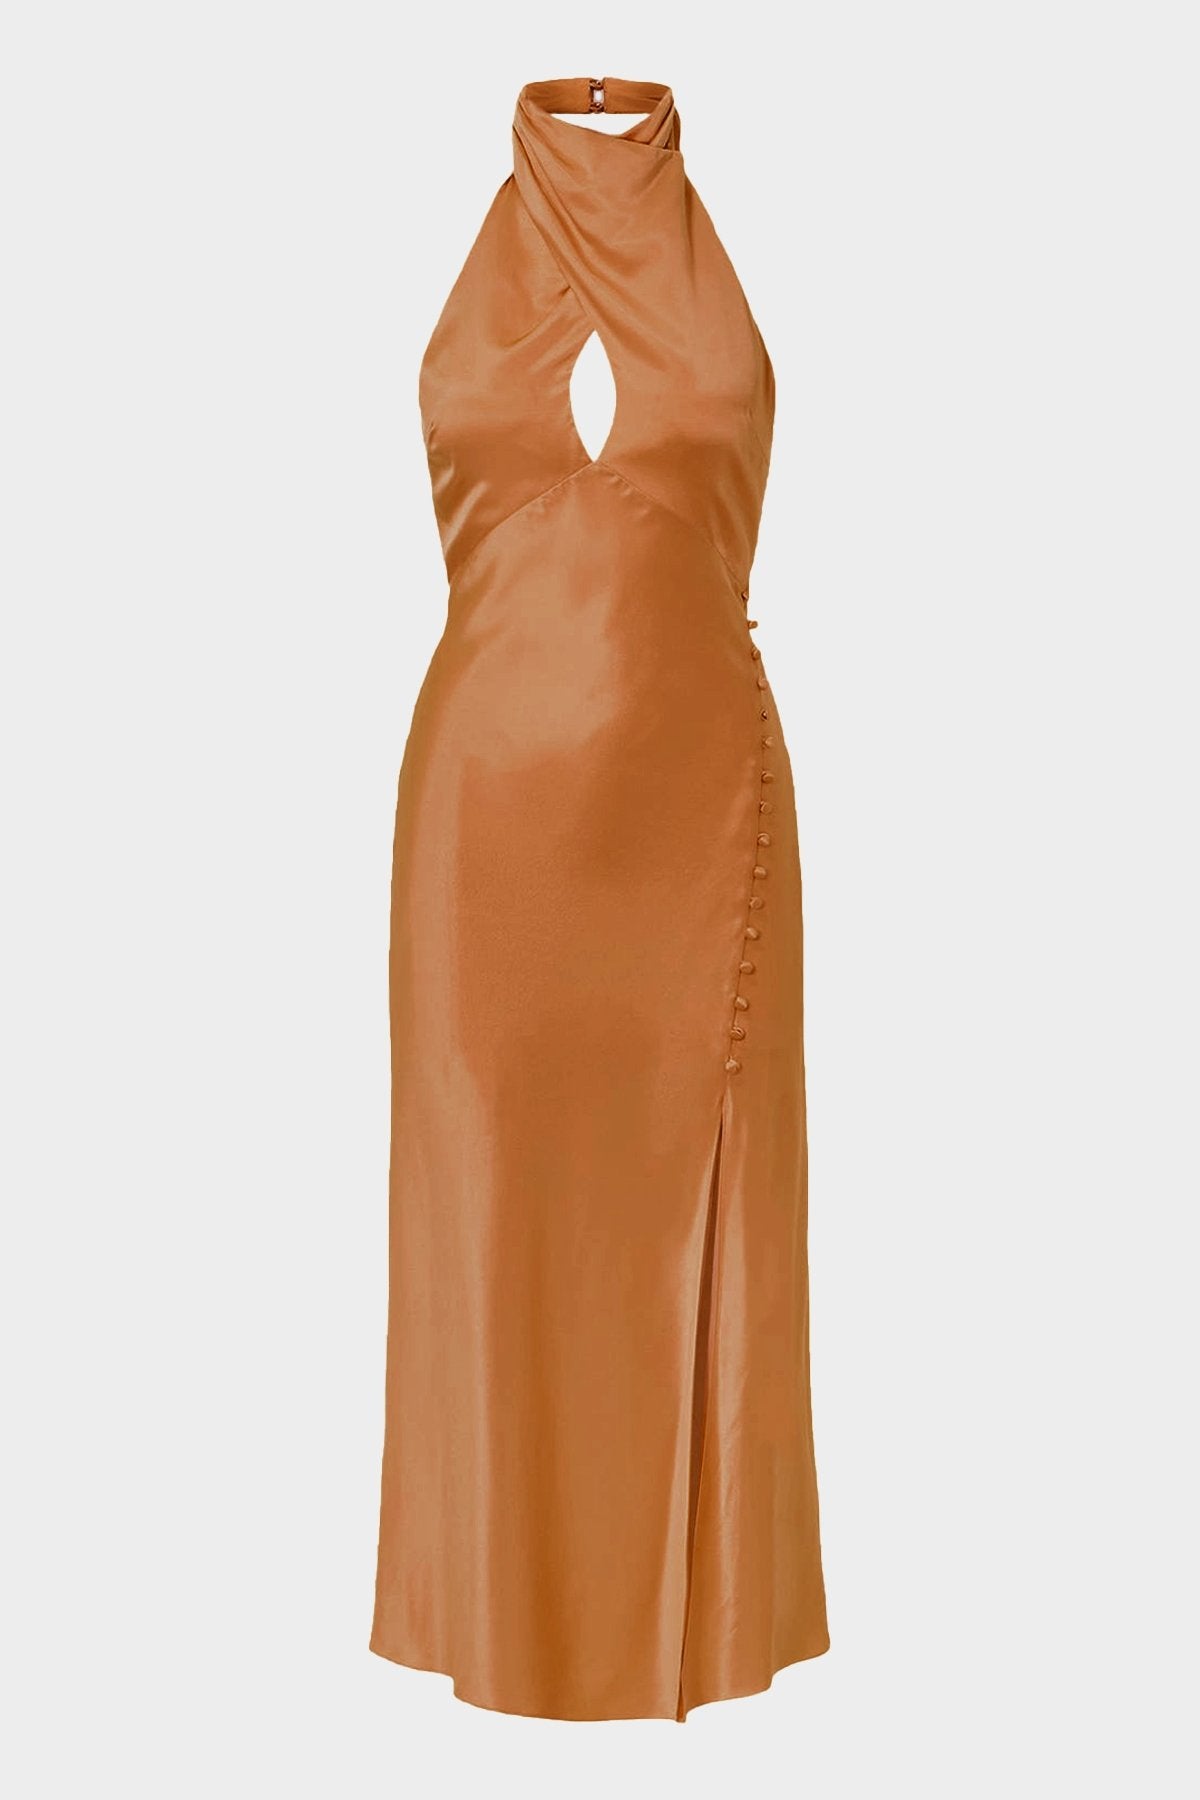 Aline Dress in Caramel - shop-olivia.com